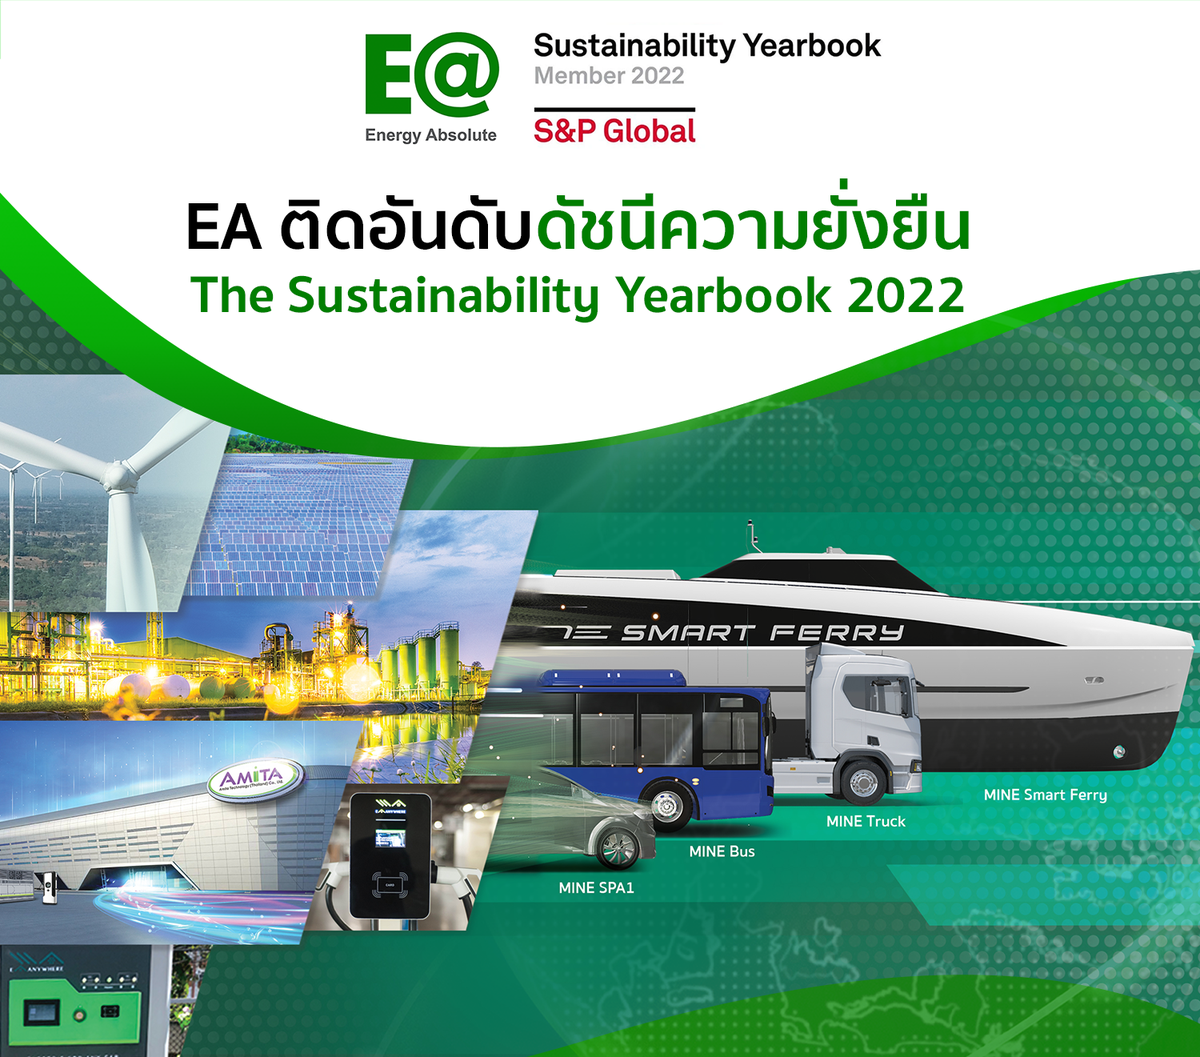 EA ปลื้ม! ติดอันดับดัชนีความยั่งยืนระดับสากล The Sustainability Yearbook 2022 ระดับ Member จาก SP Global ตอกย้ำเชื่อมั่นนักลงทุนทั้งสถาบันไทยและต่างประเทศ